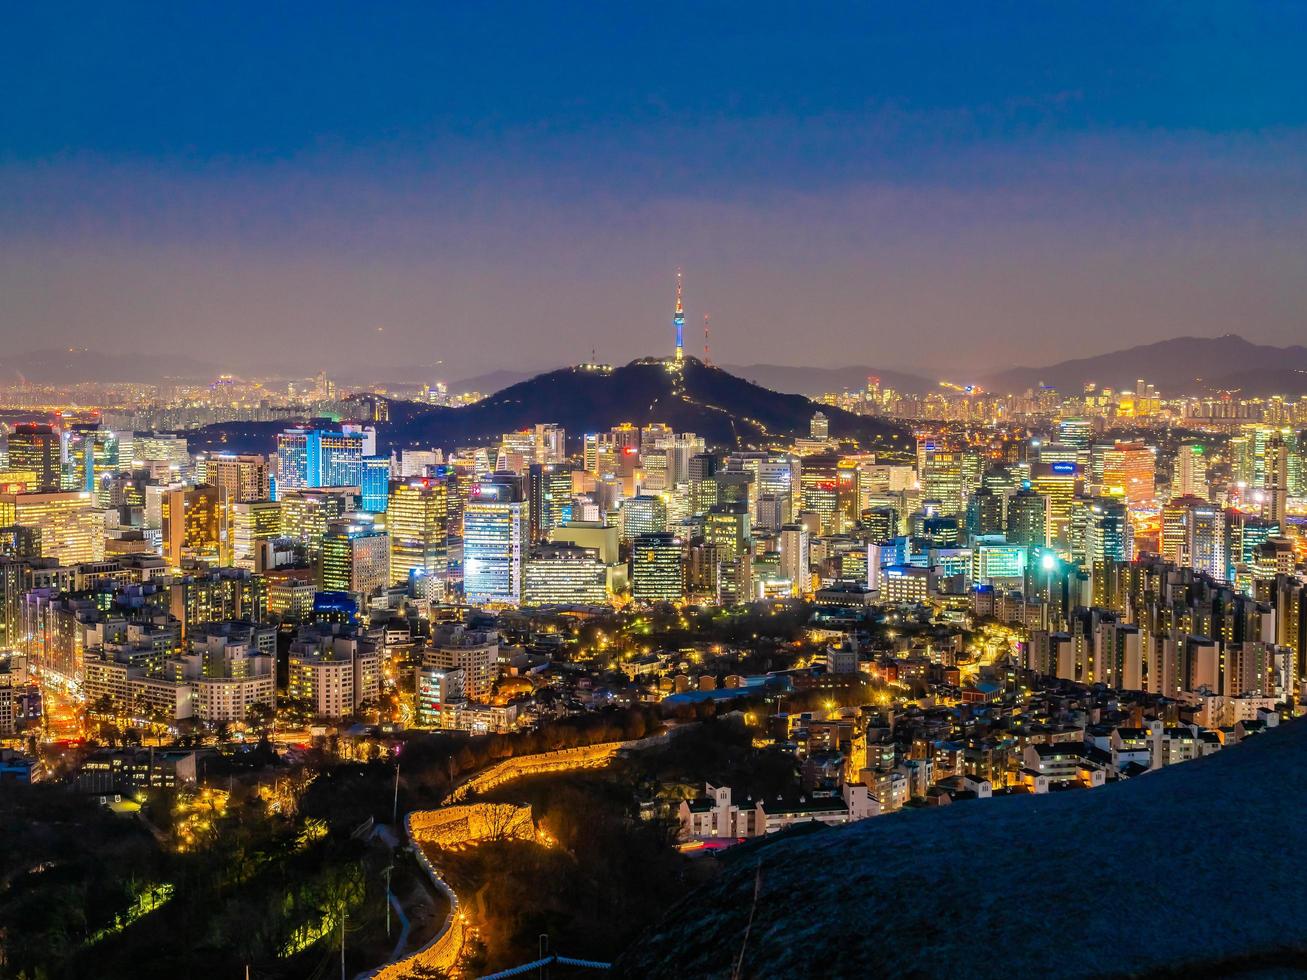 stadsbilden i Seoul, Sydkorea foto